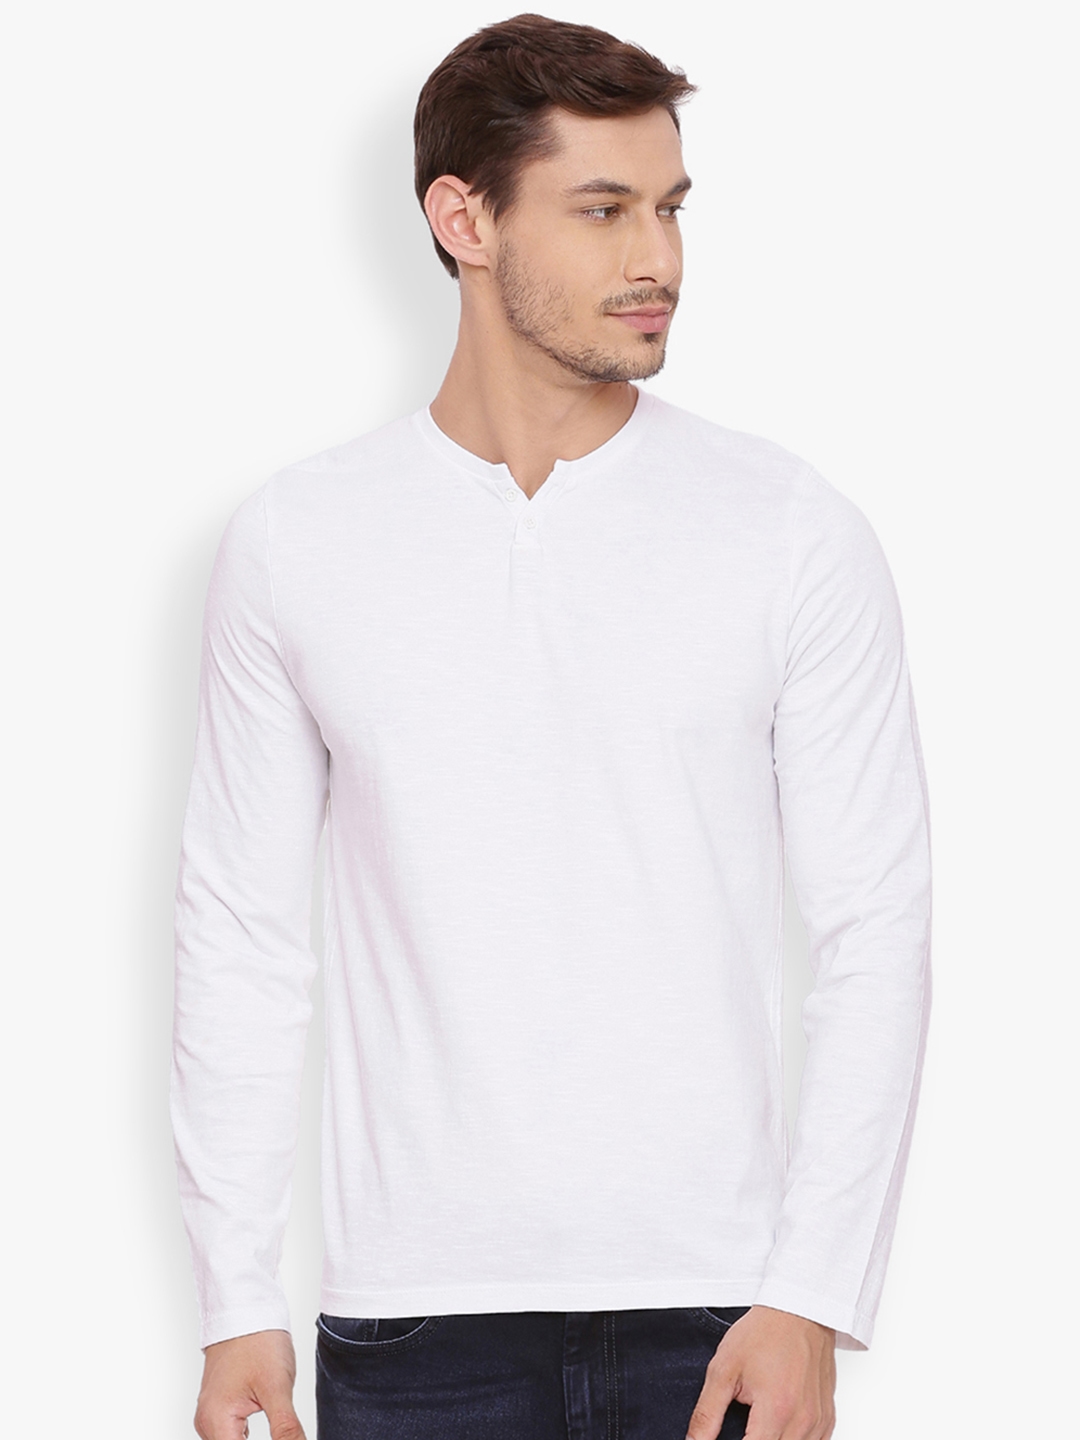 Buy Basics Men White Solid Henley Neck T Shirt - Tshirts for Men 7763798 Myntra